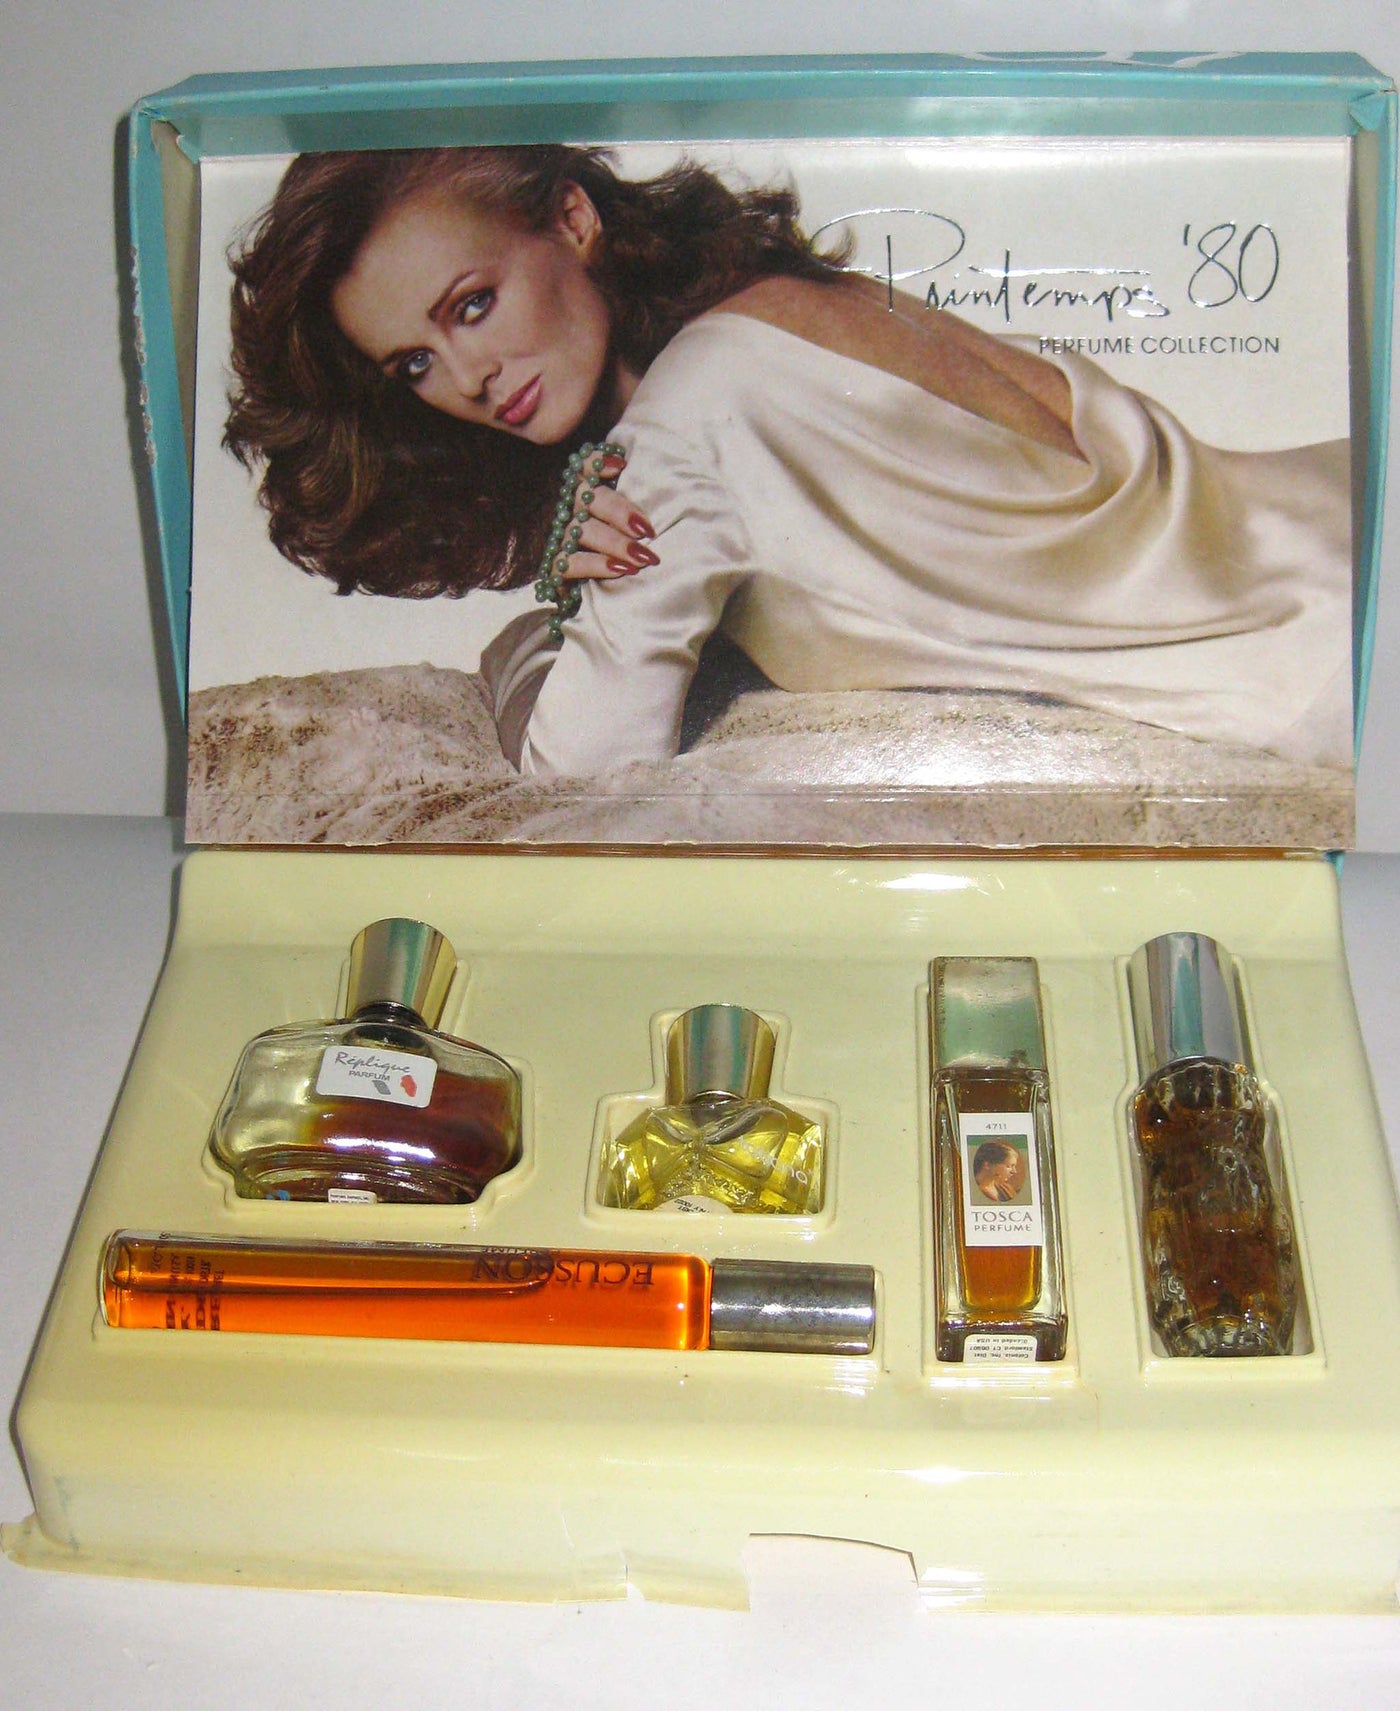 Printemps 80' Perfume Collection